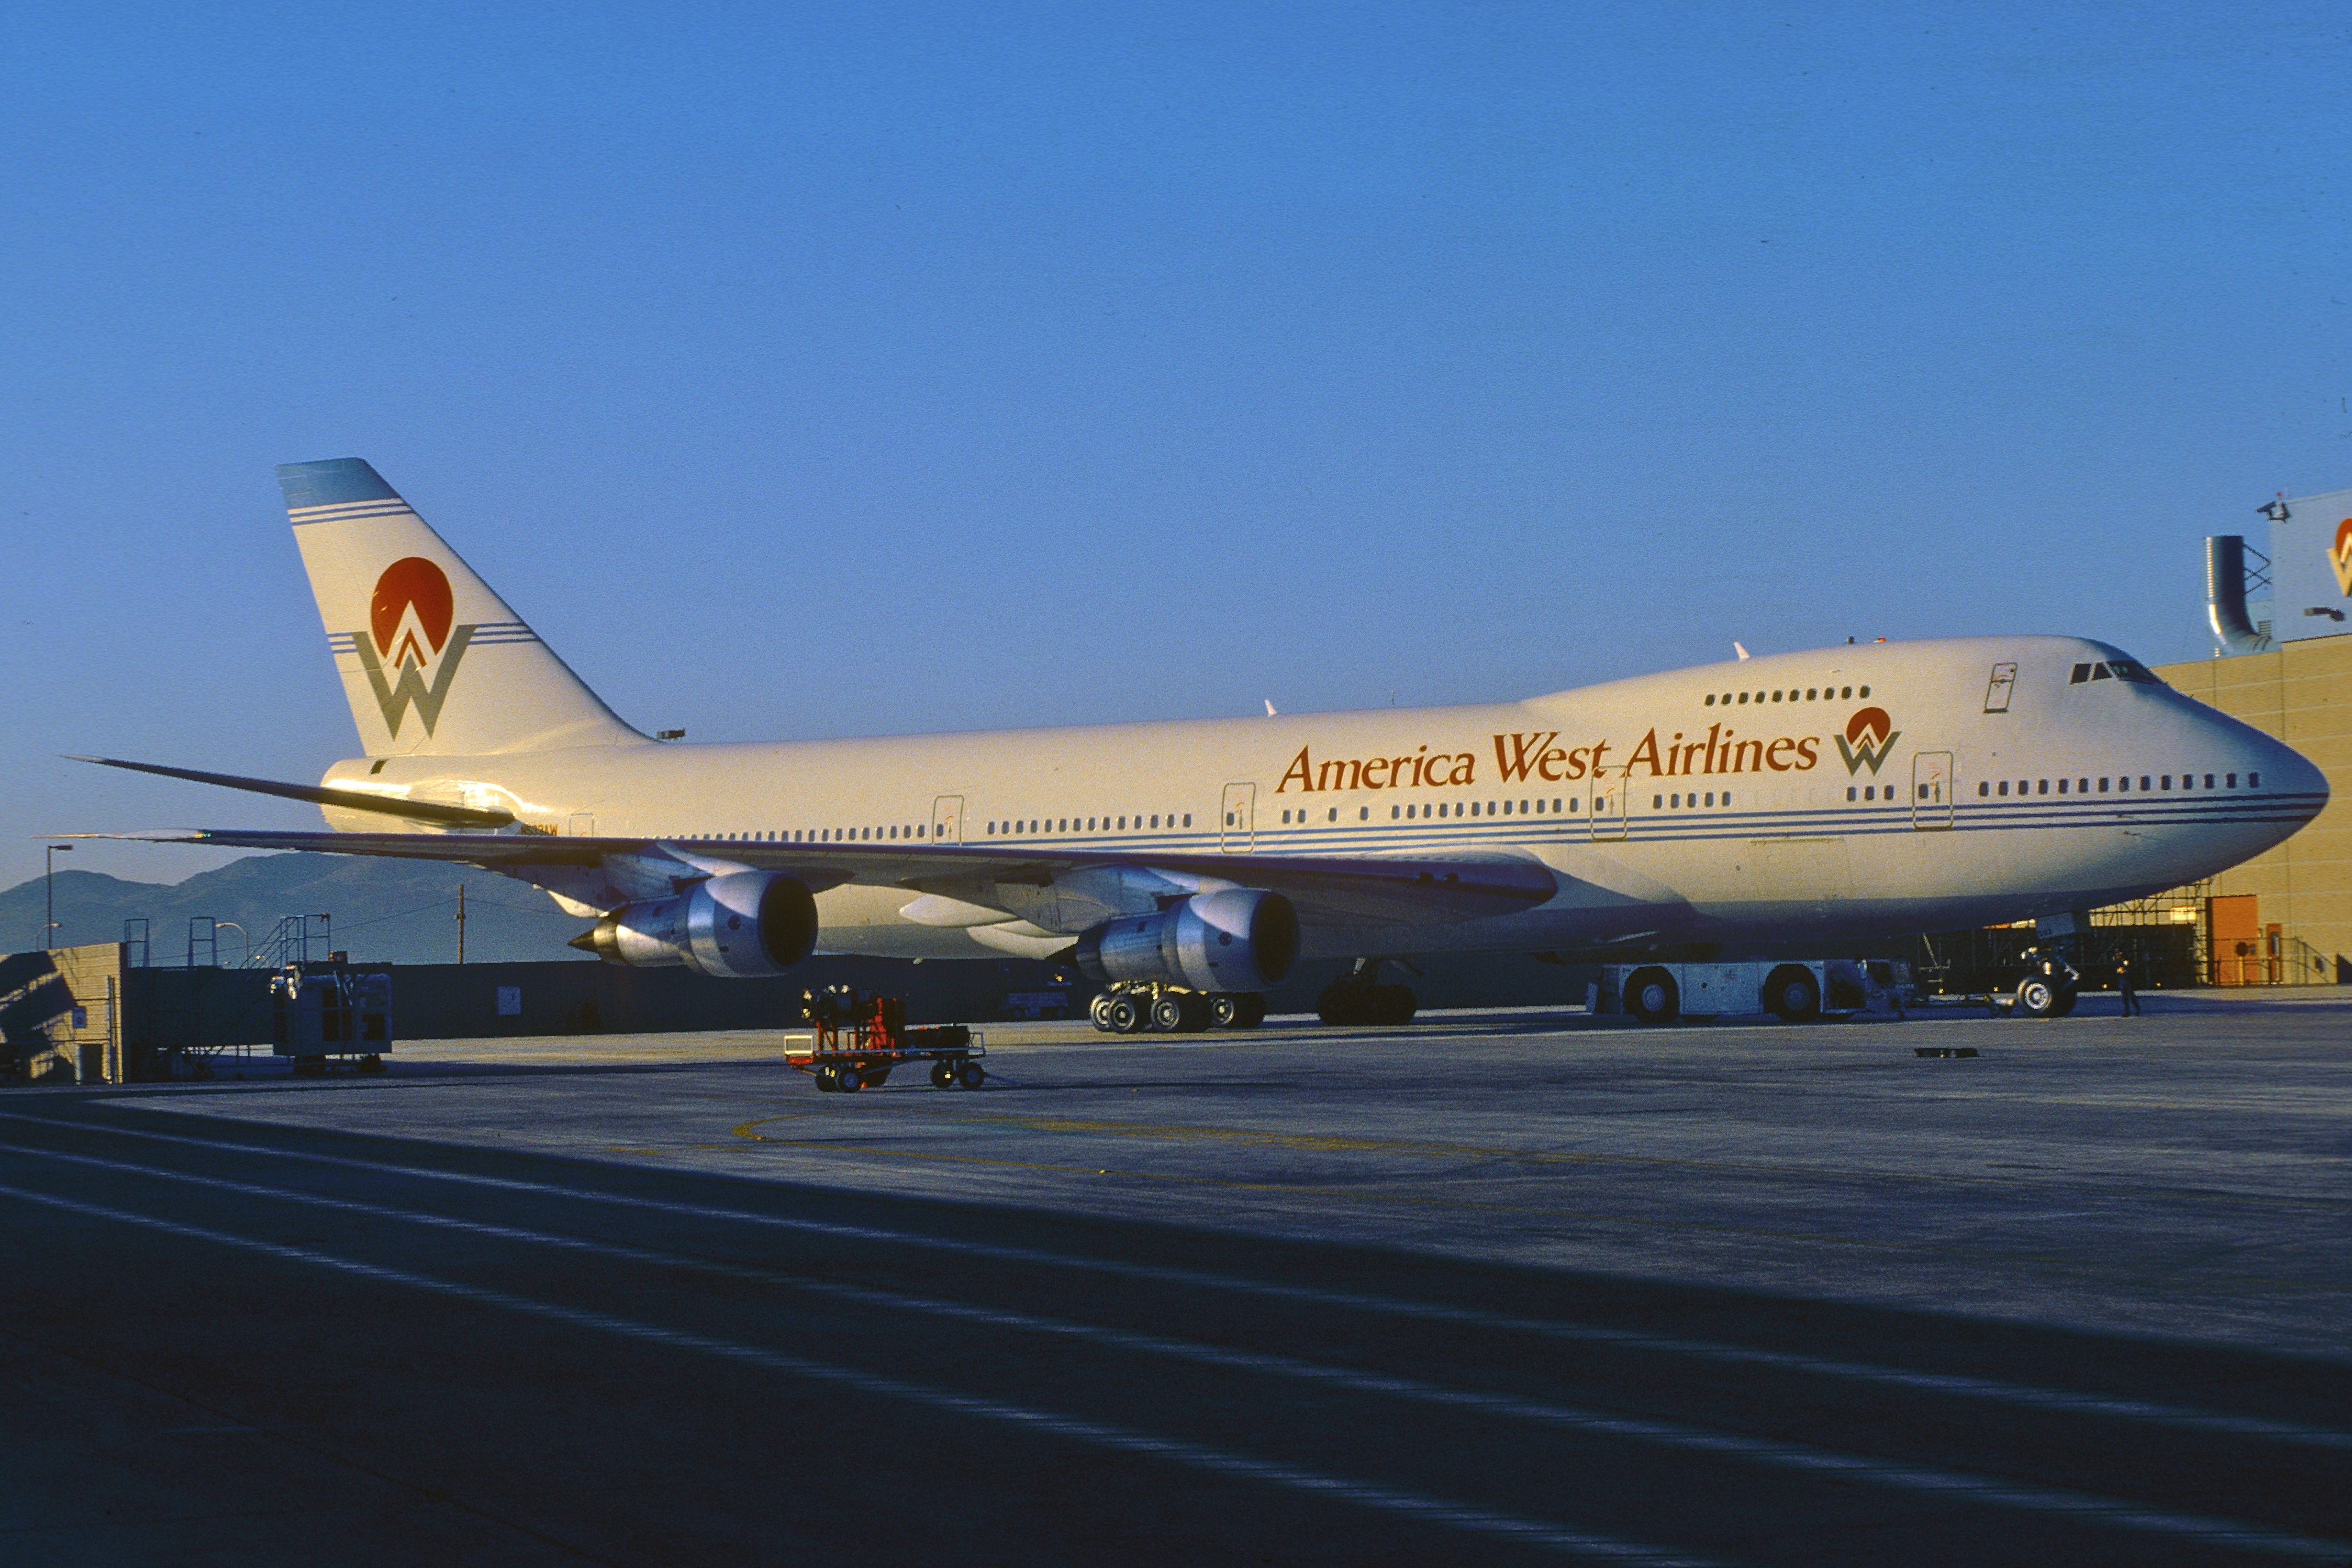 America West Airlines Boeing 747-206B